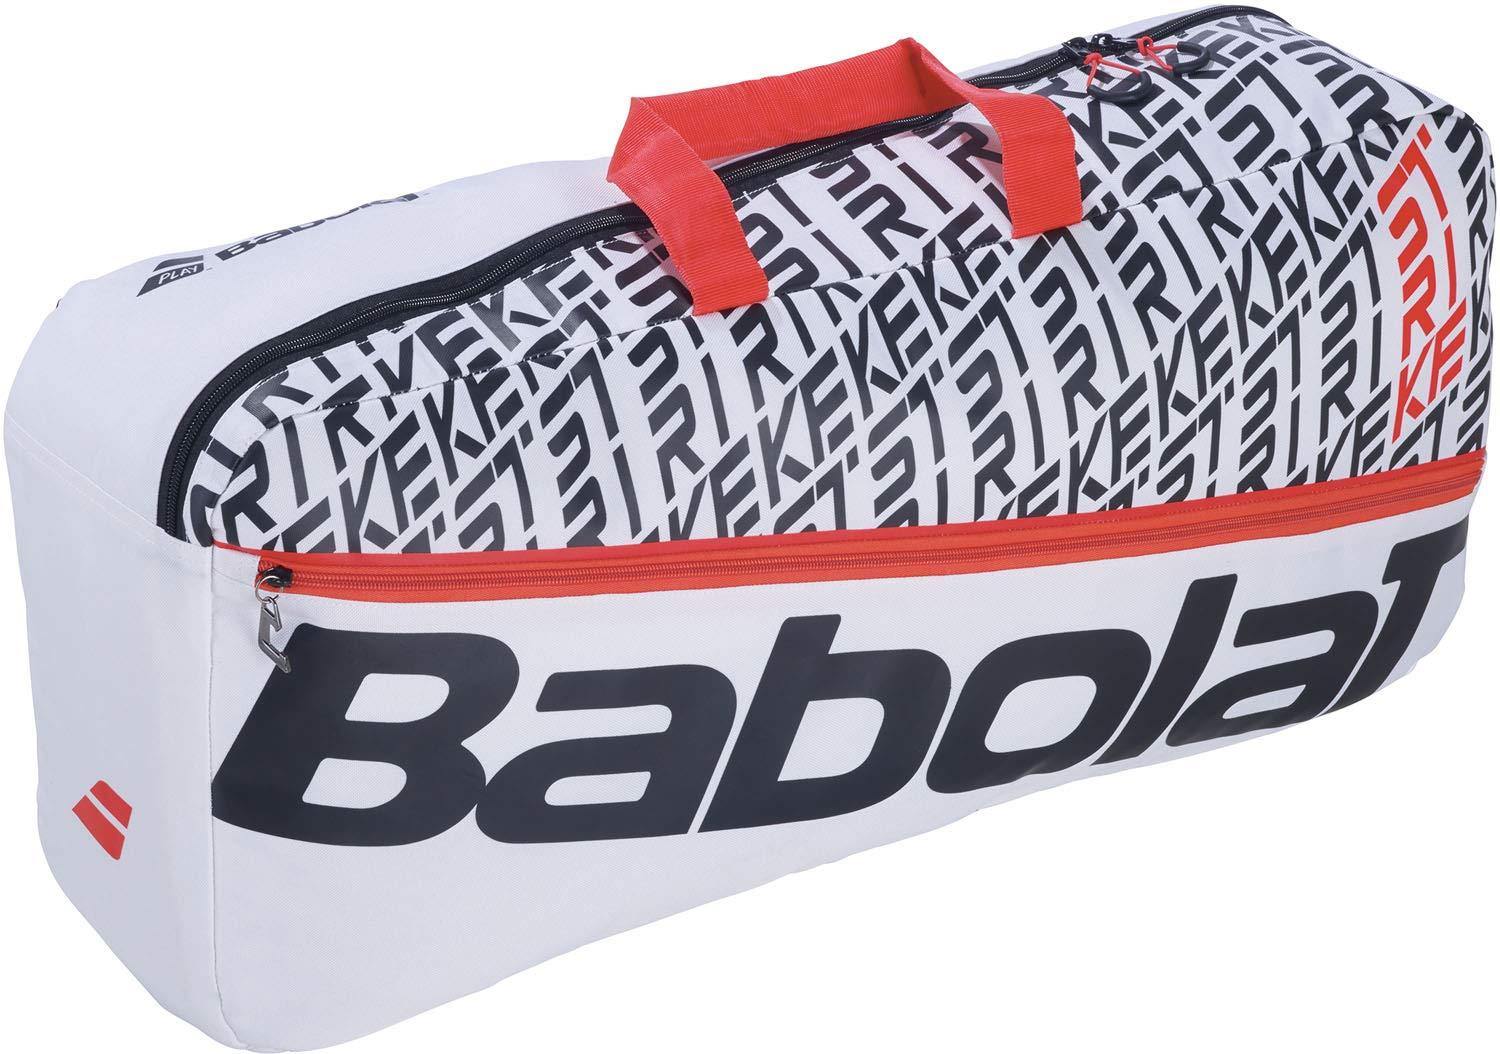 Babolat Duffle M Pure Strike Tennis Bag - White/Red - Best Price online Prokicksports.com